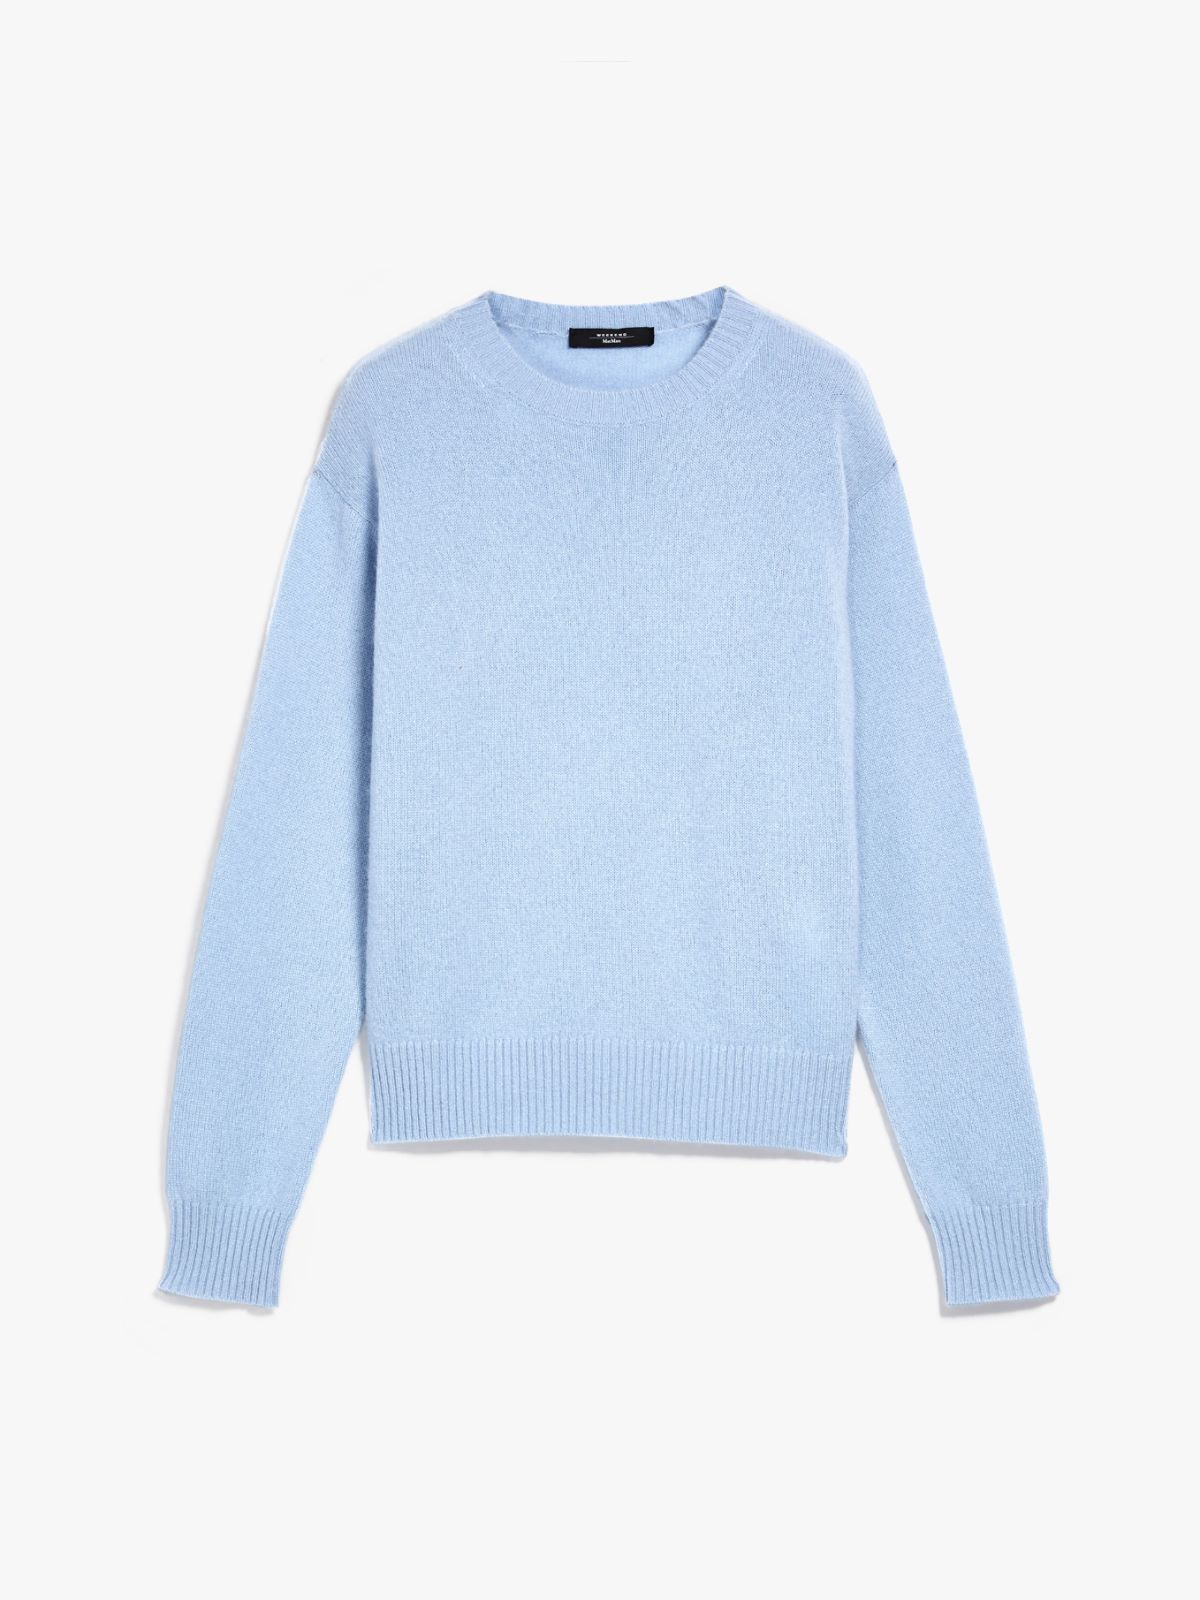 Cashmere yarn sweater - SKY BLUE - Weekend Max Mara - 6